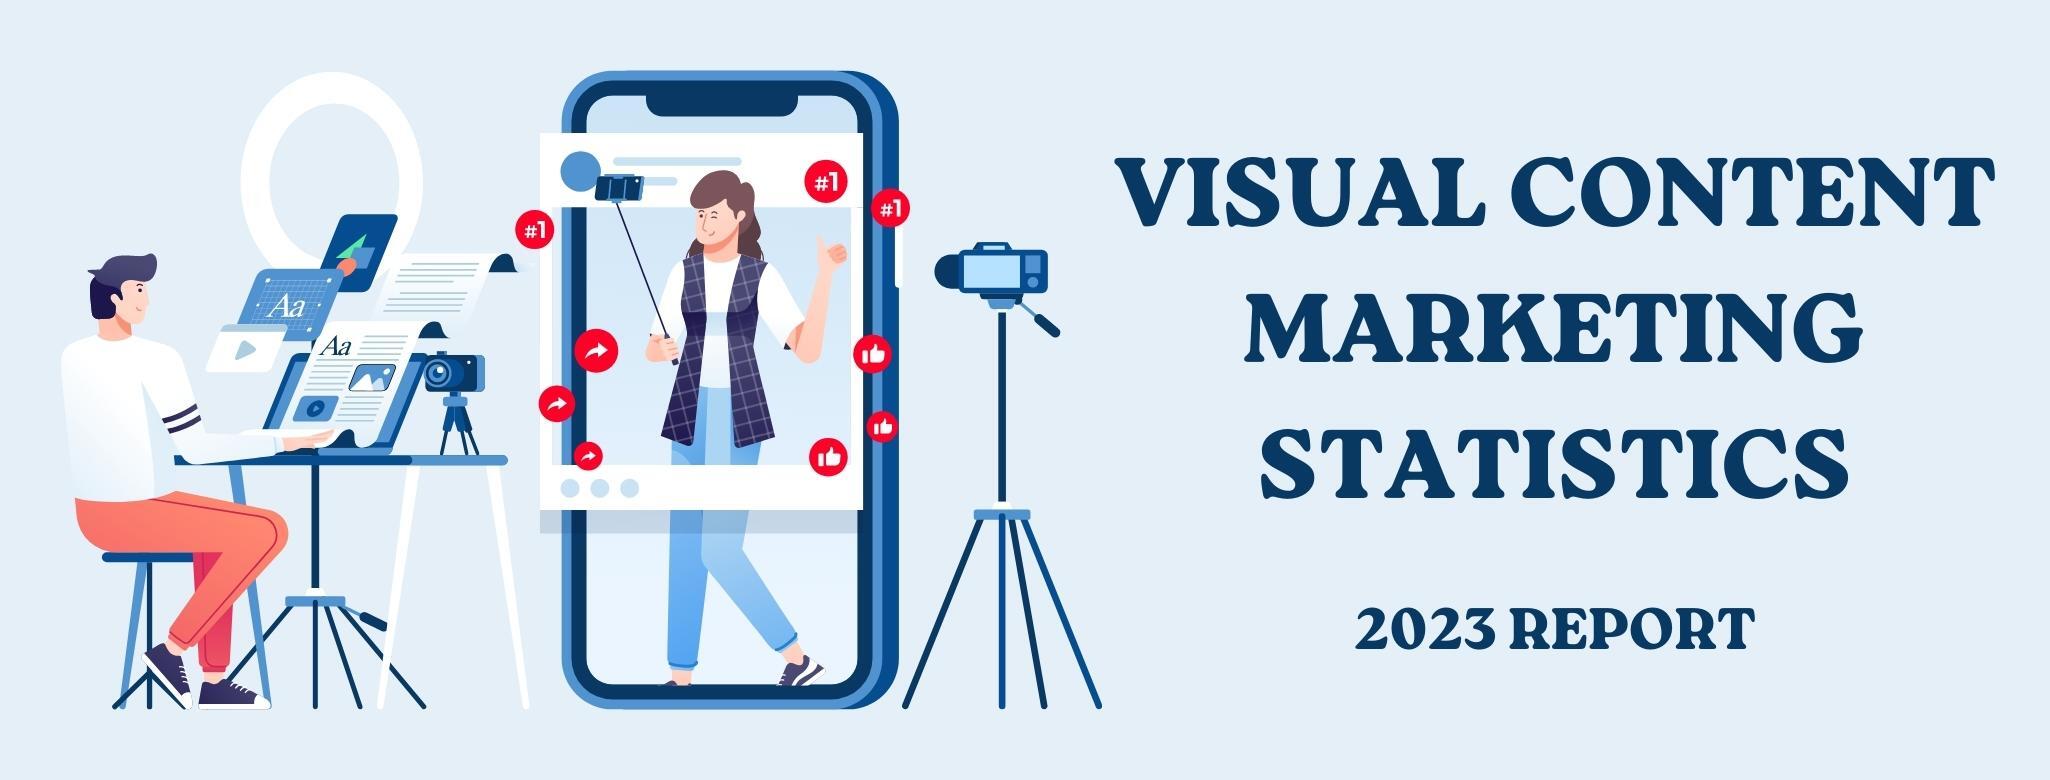 visual content marketing statistics